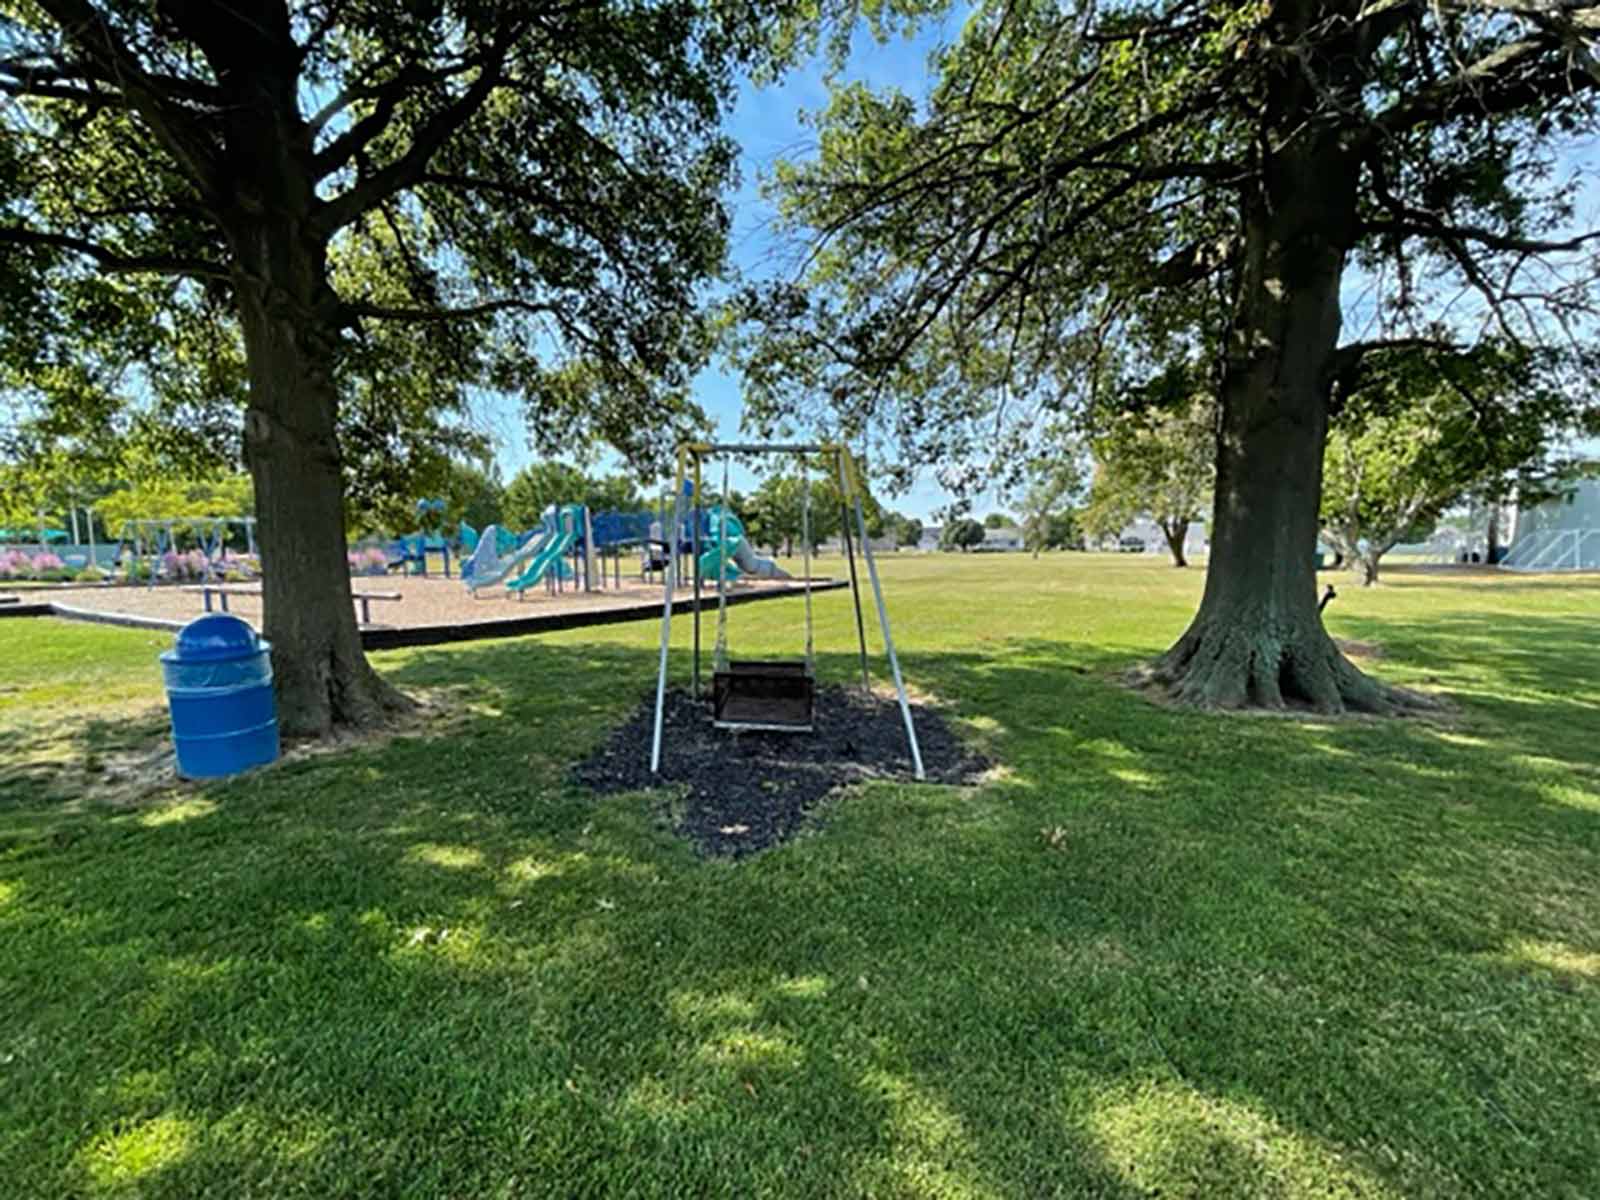 a swing at Davis Park